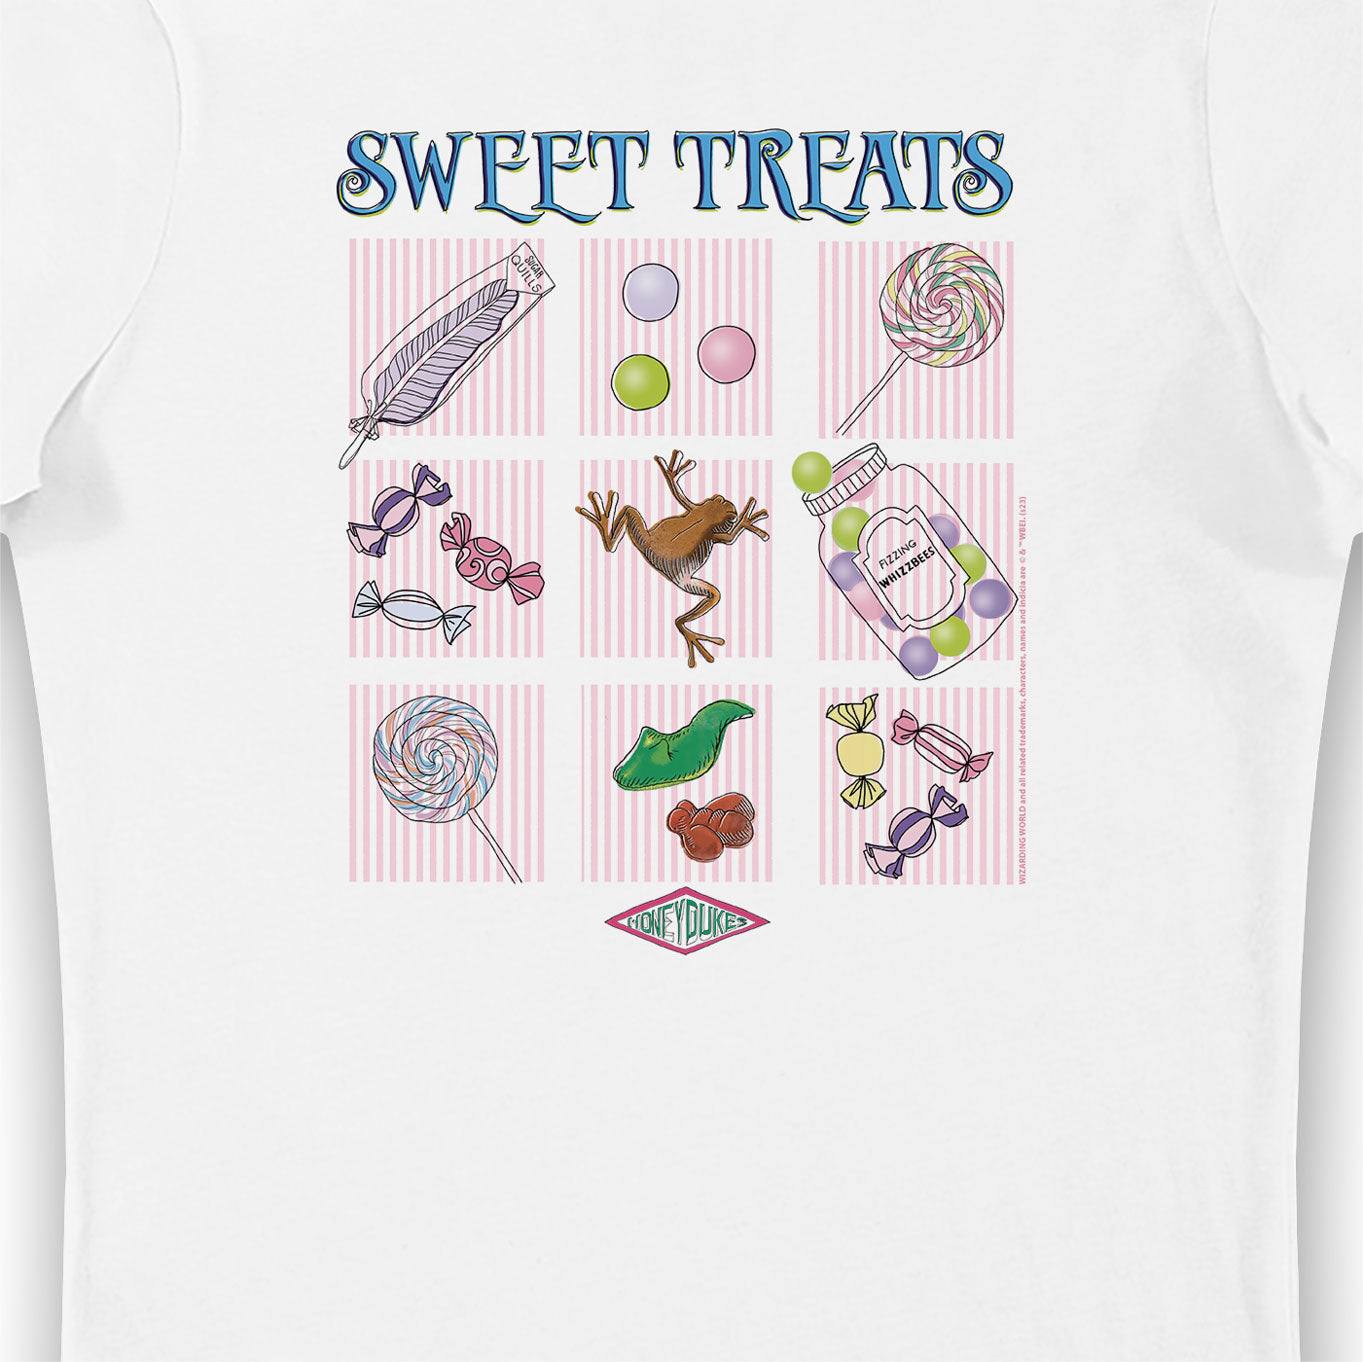 Harry Potter Honeydukes Sweet Treats Ladies Fit T-Shirt